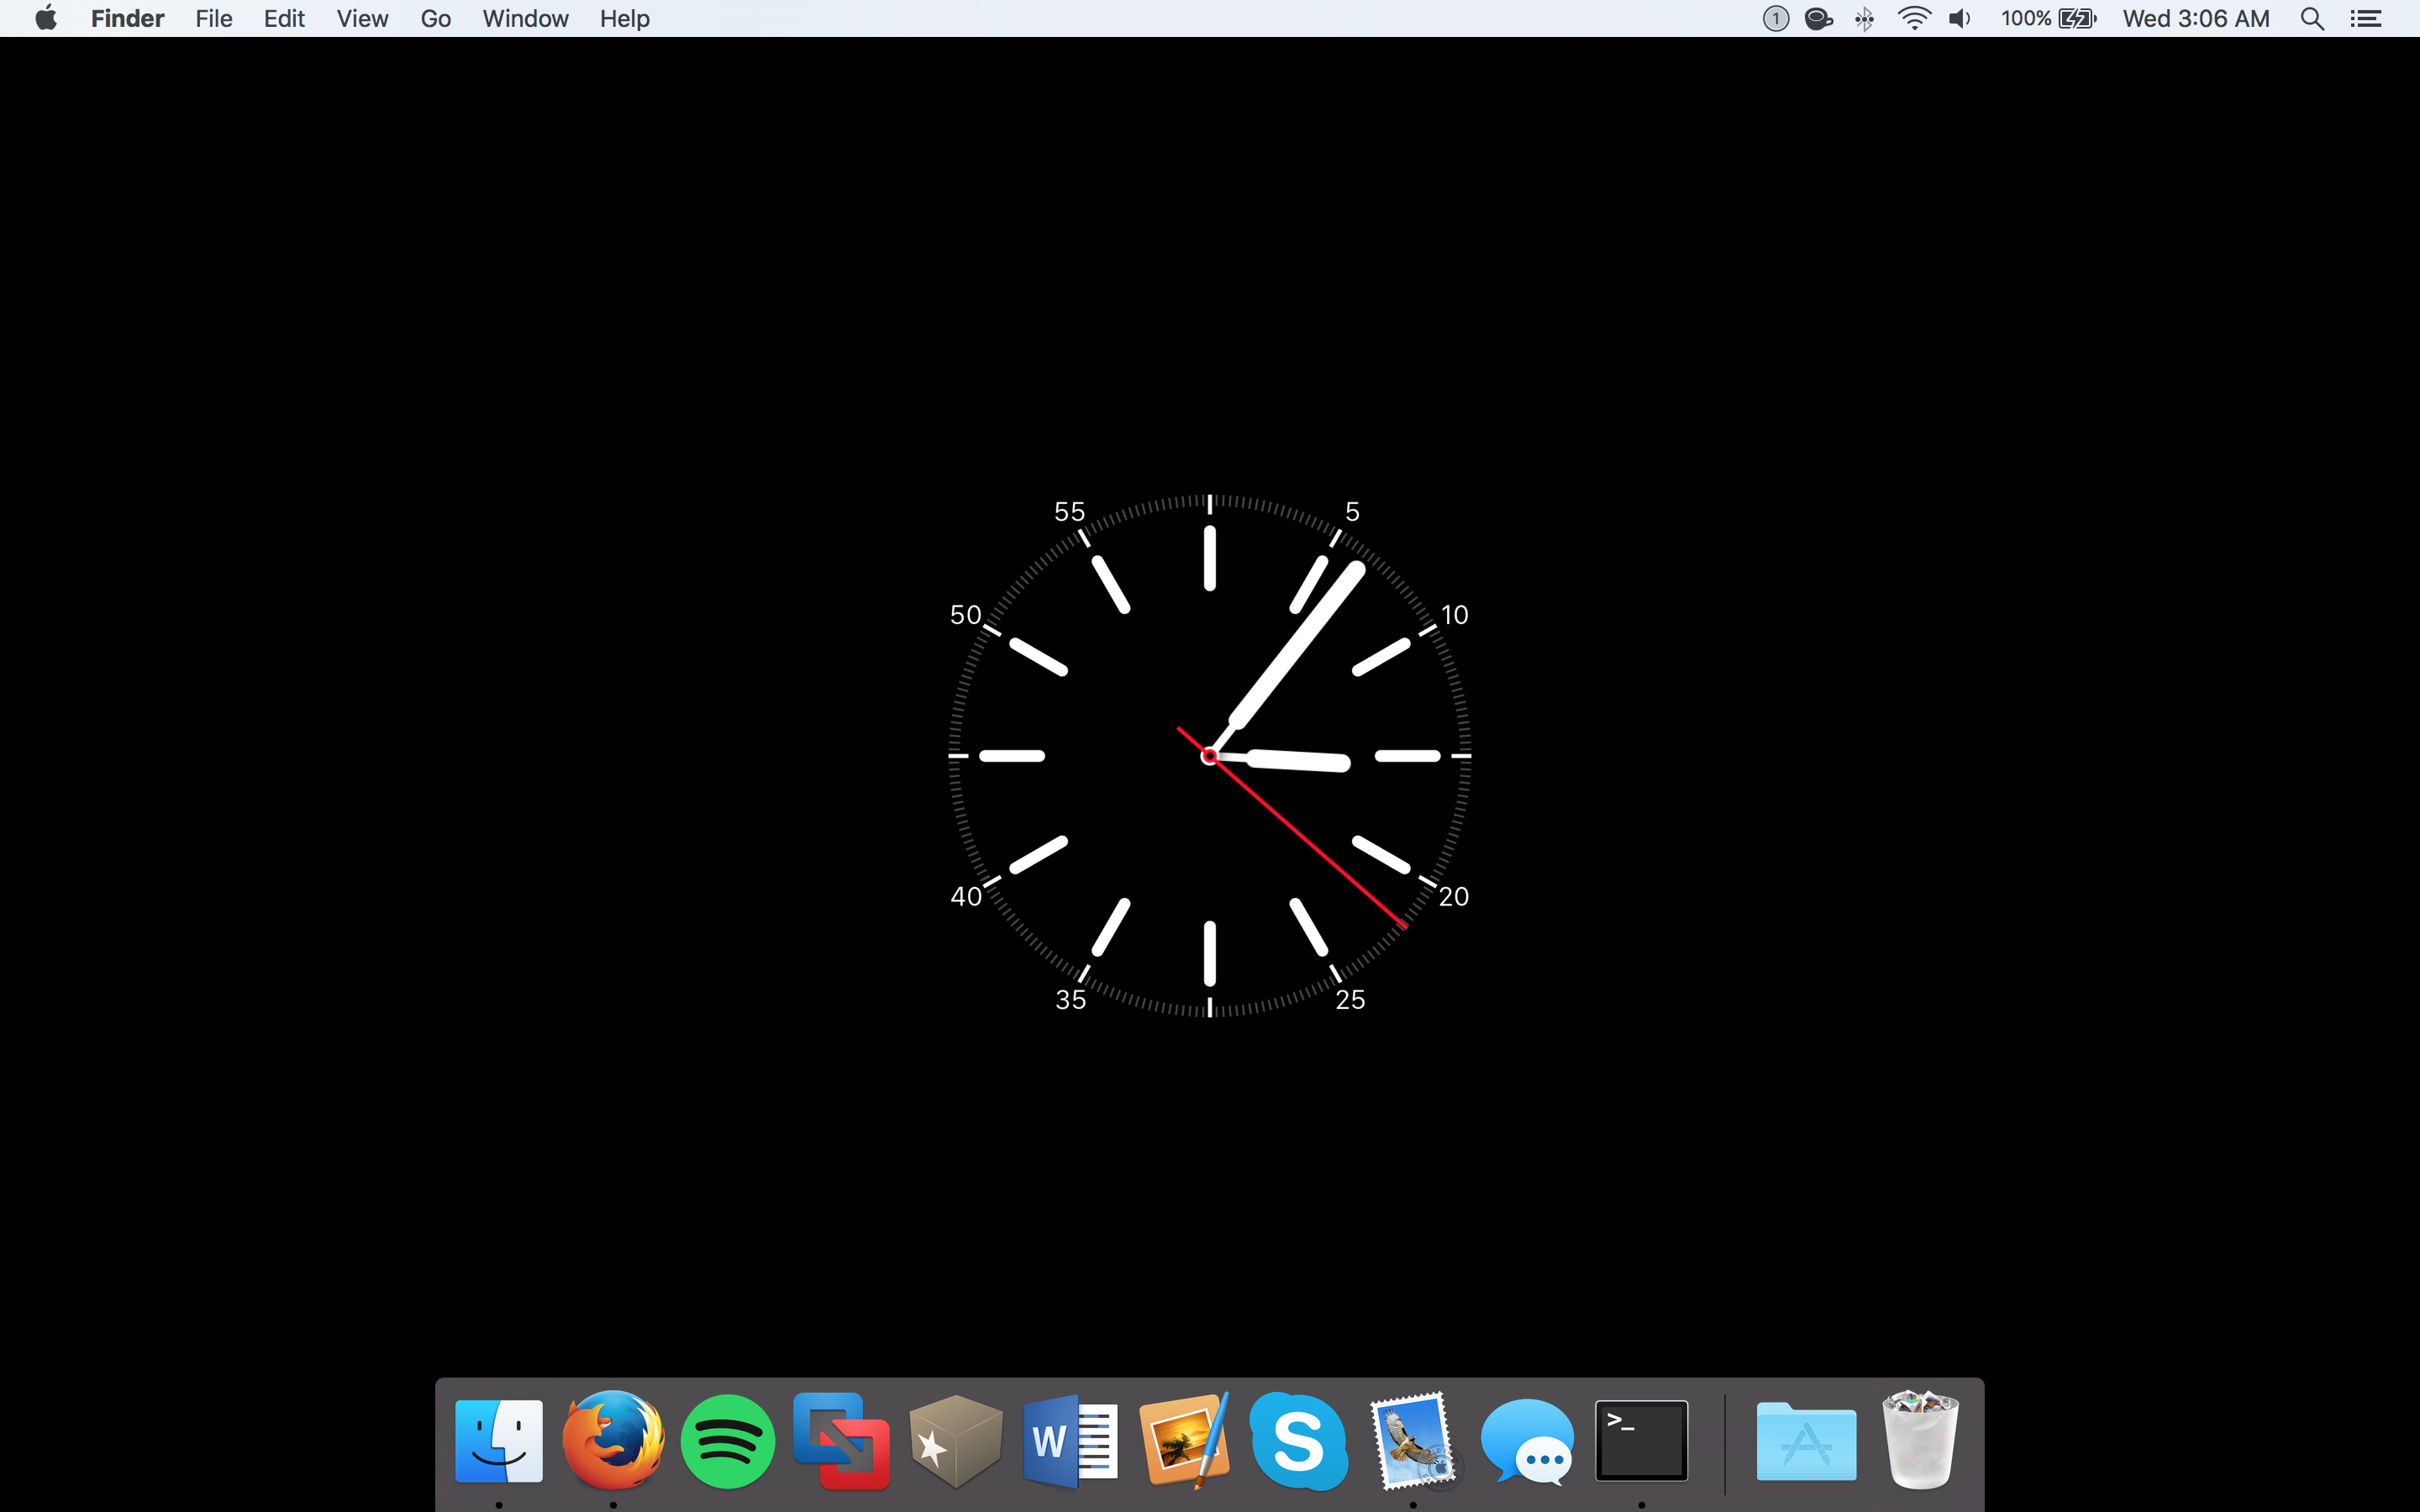 Mac App To Set Screensaver To Count Days